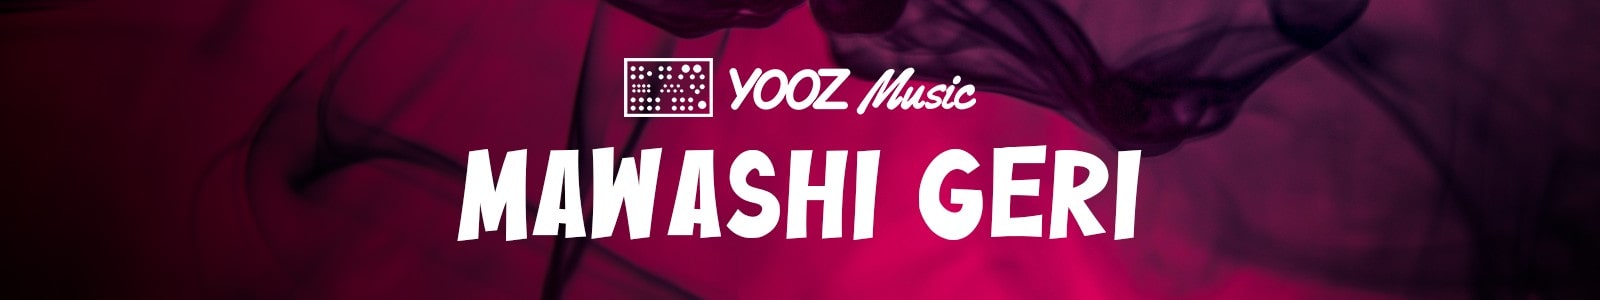 Mawashi Geri Ultimate Round House Kick Synthesizer by Yooz Music